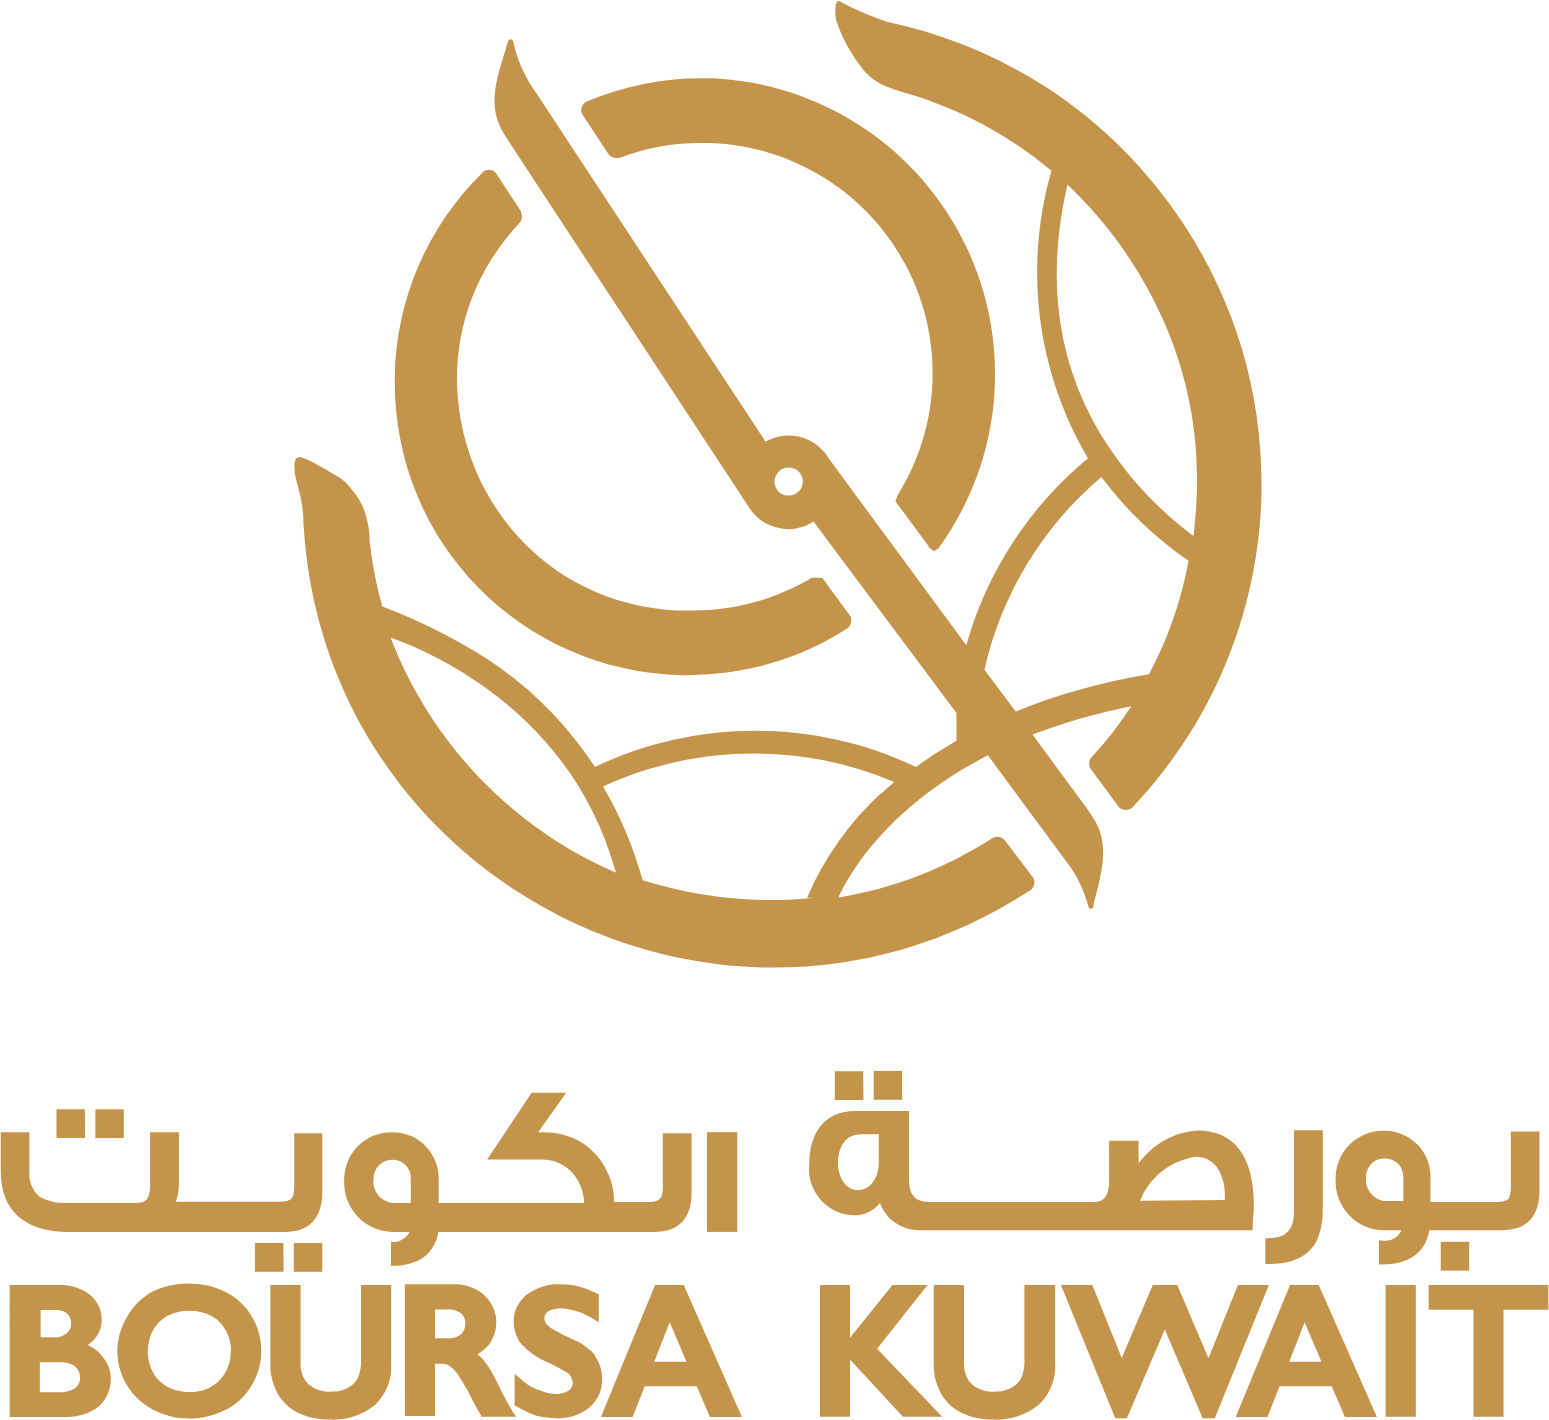 Boursa Kuwait Securities Company logo large (transparent PNG)